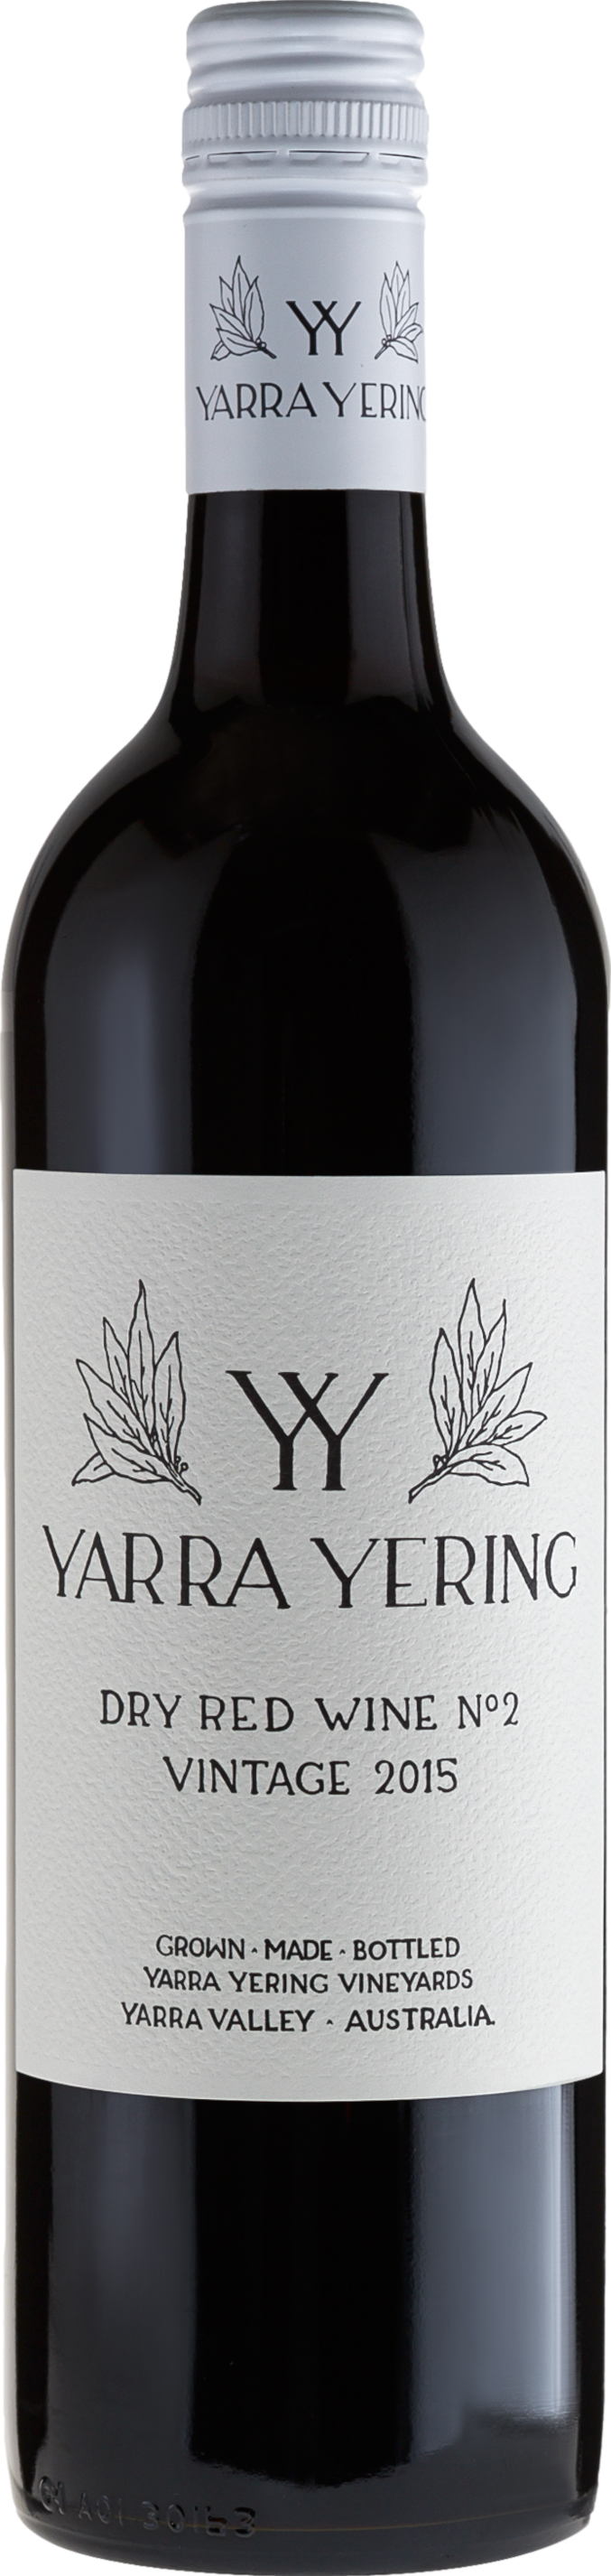 Yarra Yering Dry Red No 2 2015